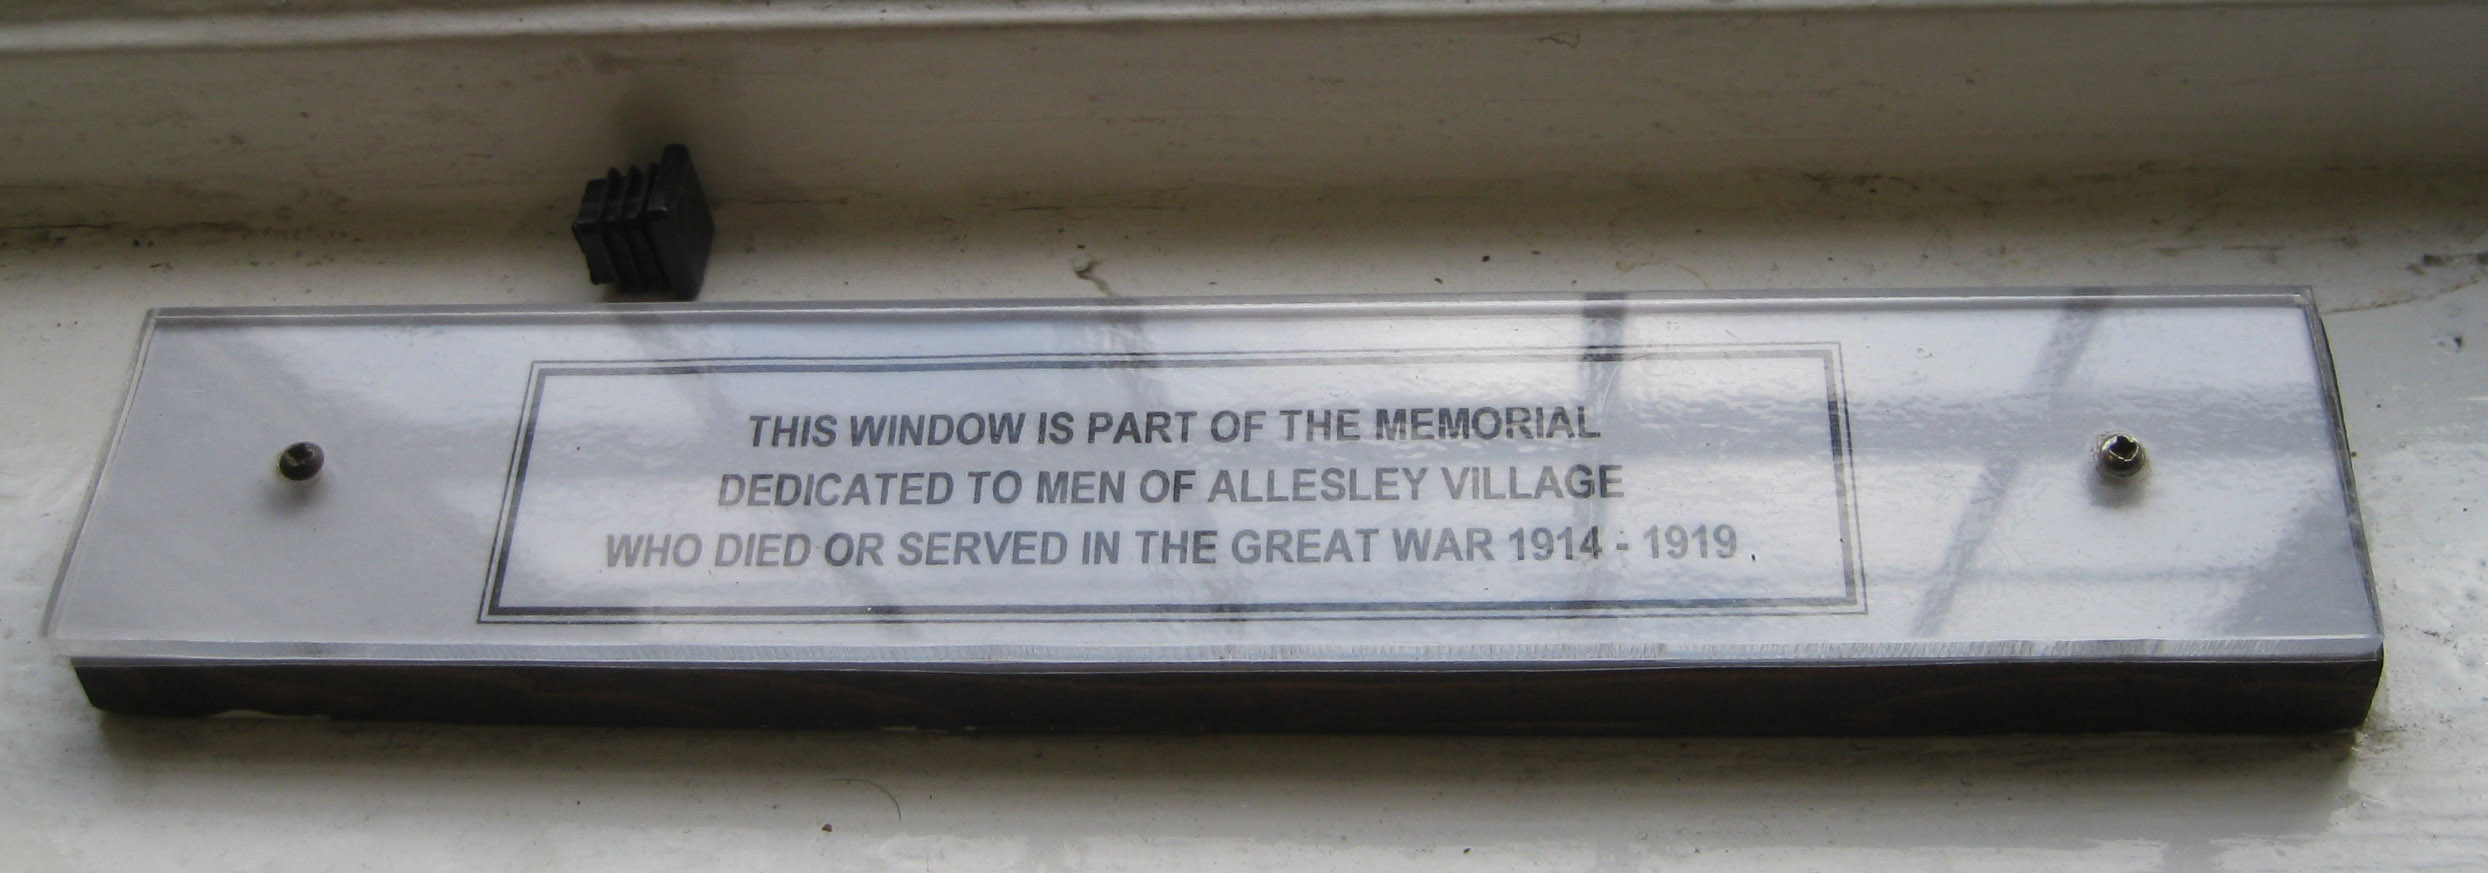 Plaque at Memorial window at Allesley Village Hall